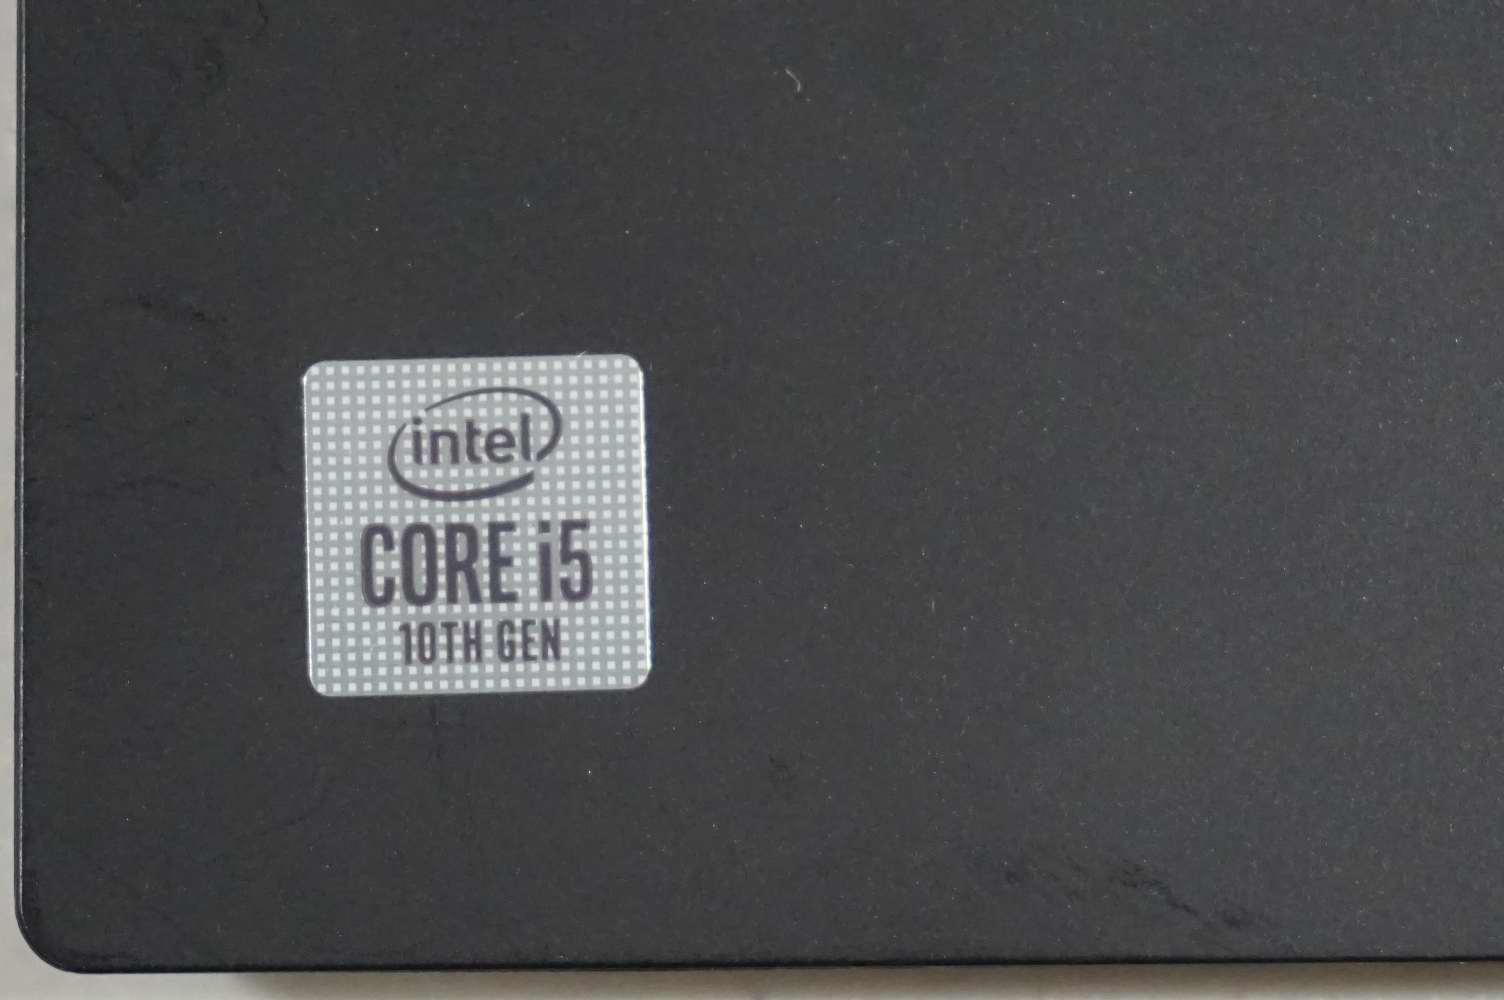 Lenovo ThinkPad L15 10th Gen Intel i5 Laptop (Ser#PF1ATDSX)